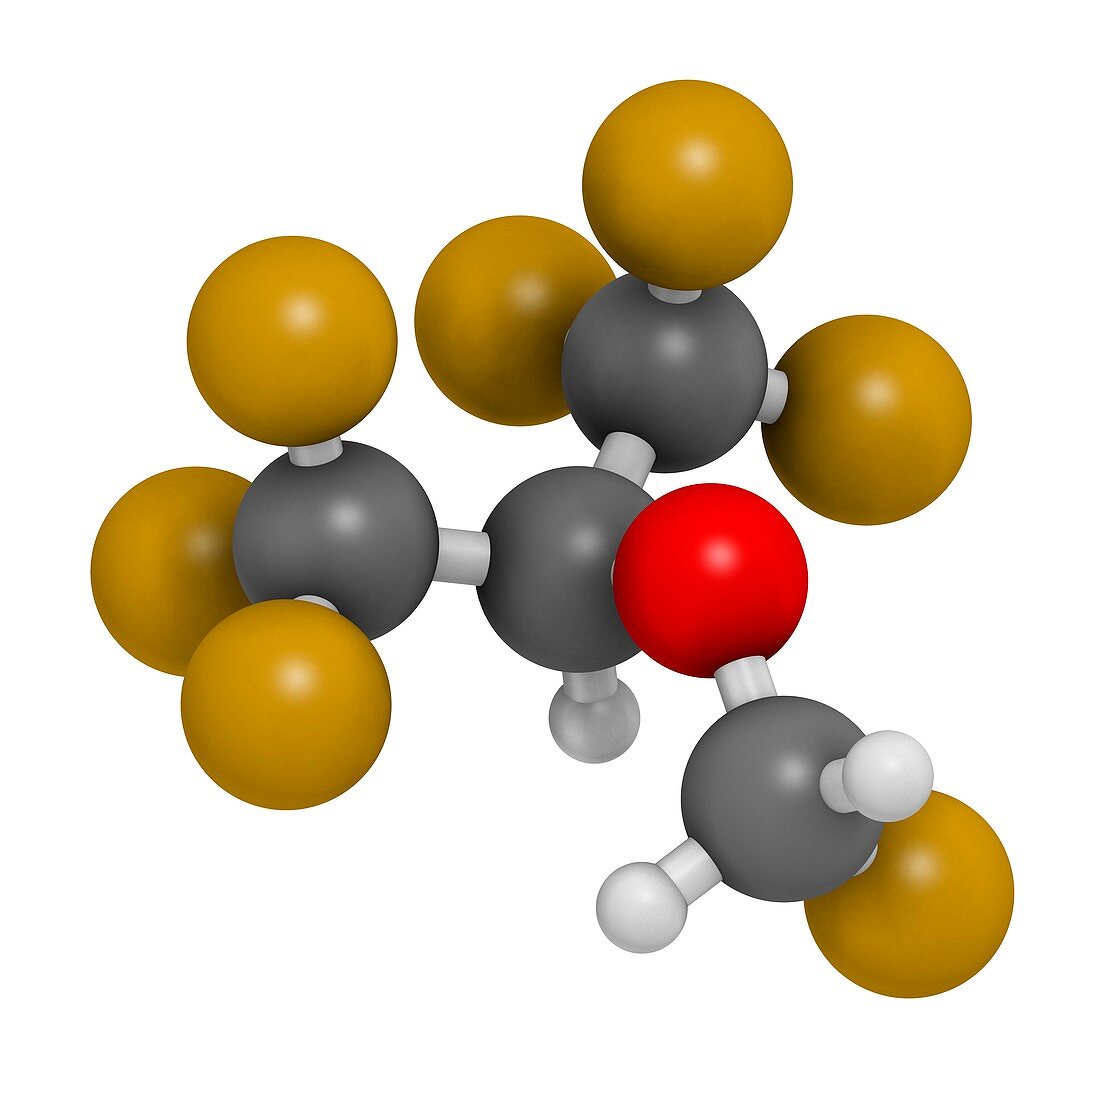 Sevoflurane anesthetic molecule